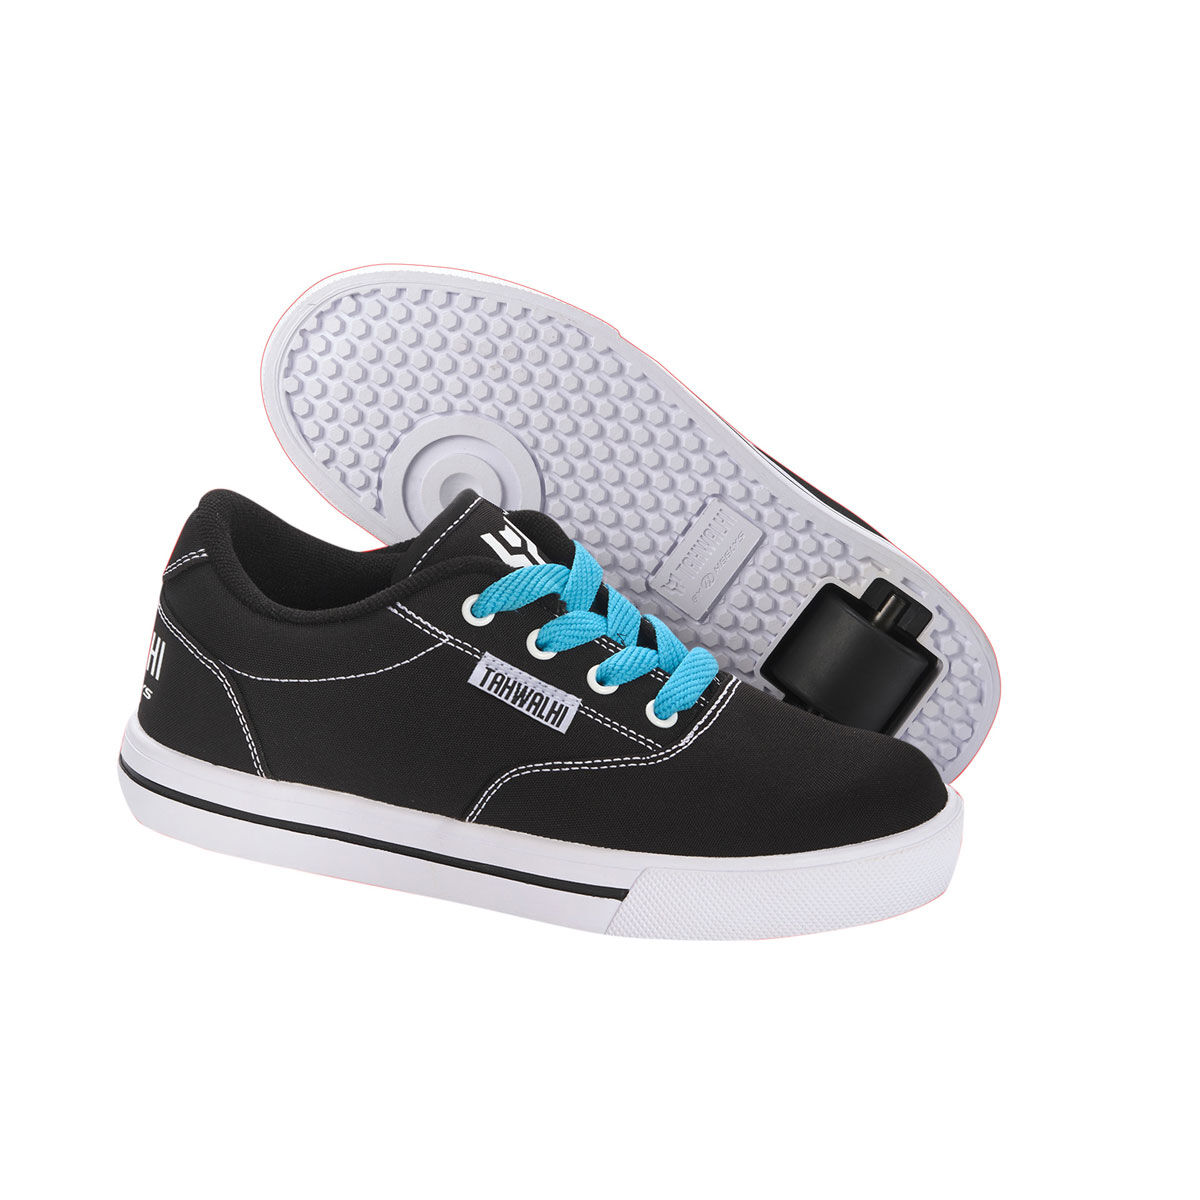 Heelys Heelys youth size 5 Black Flames Skate Shoes 